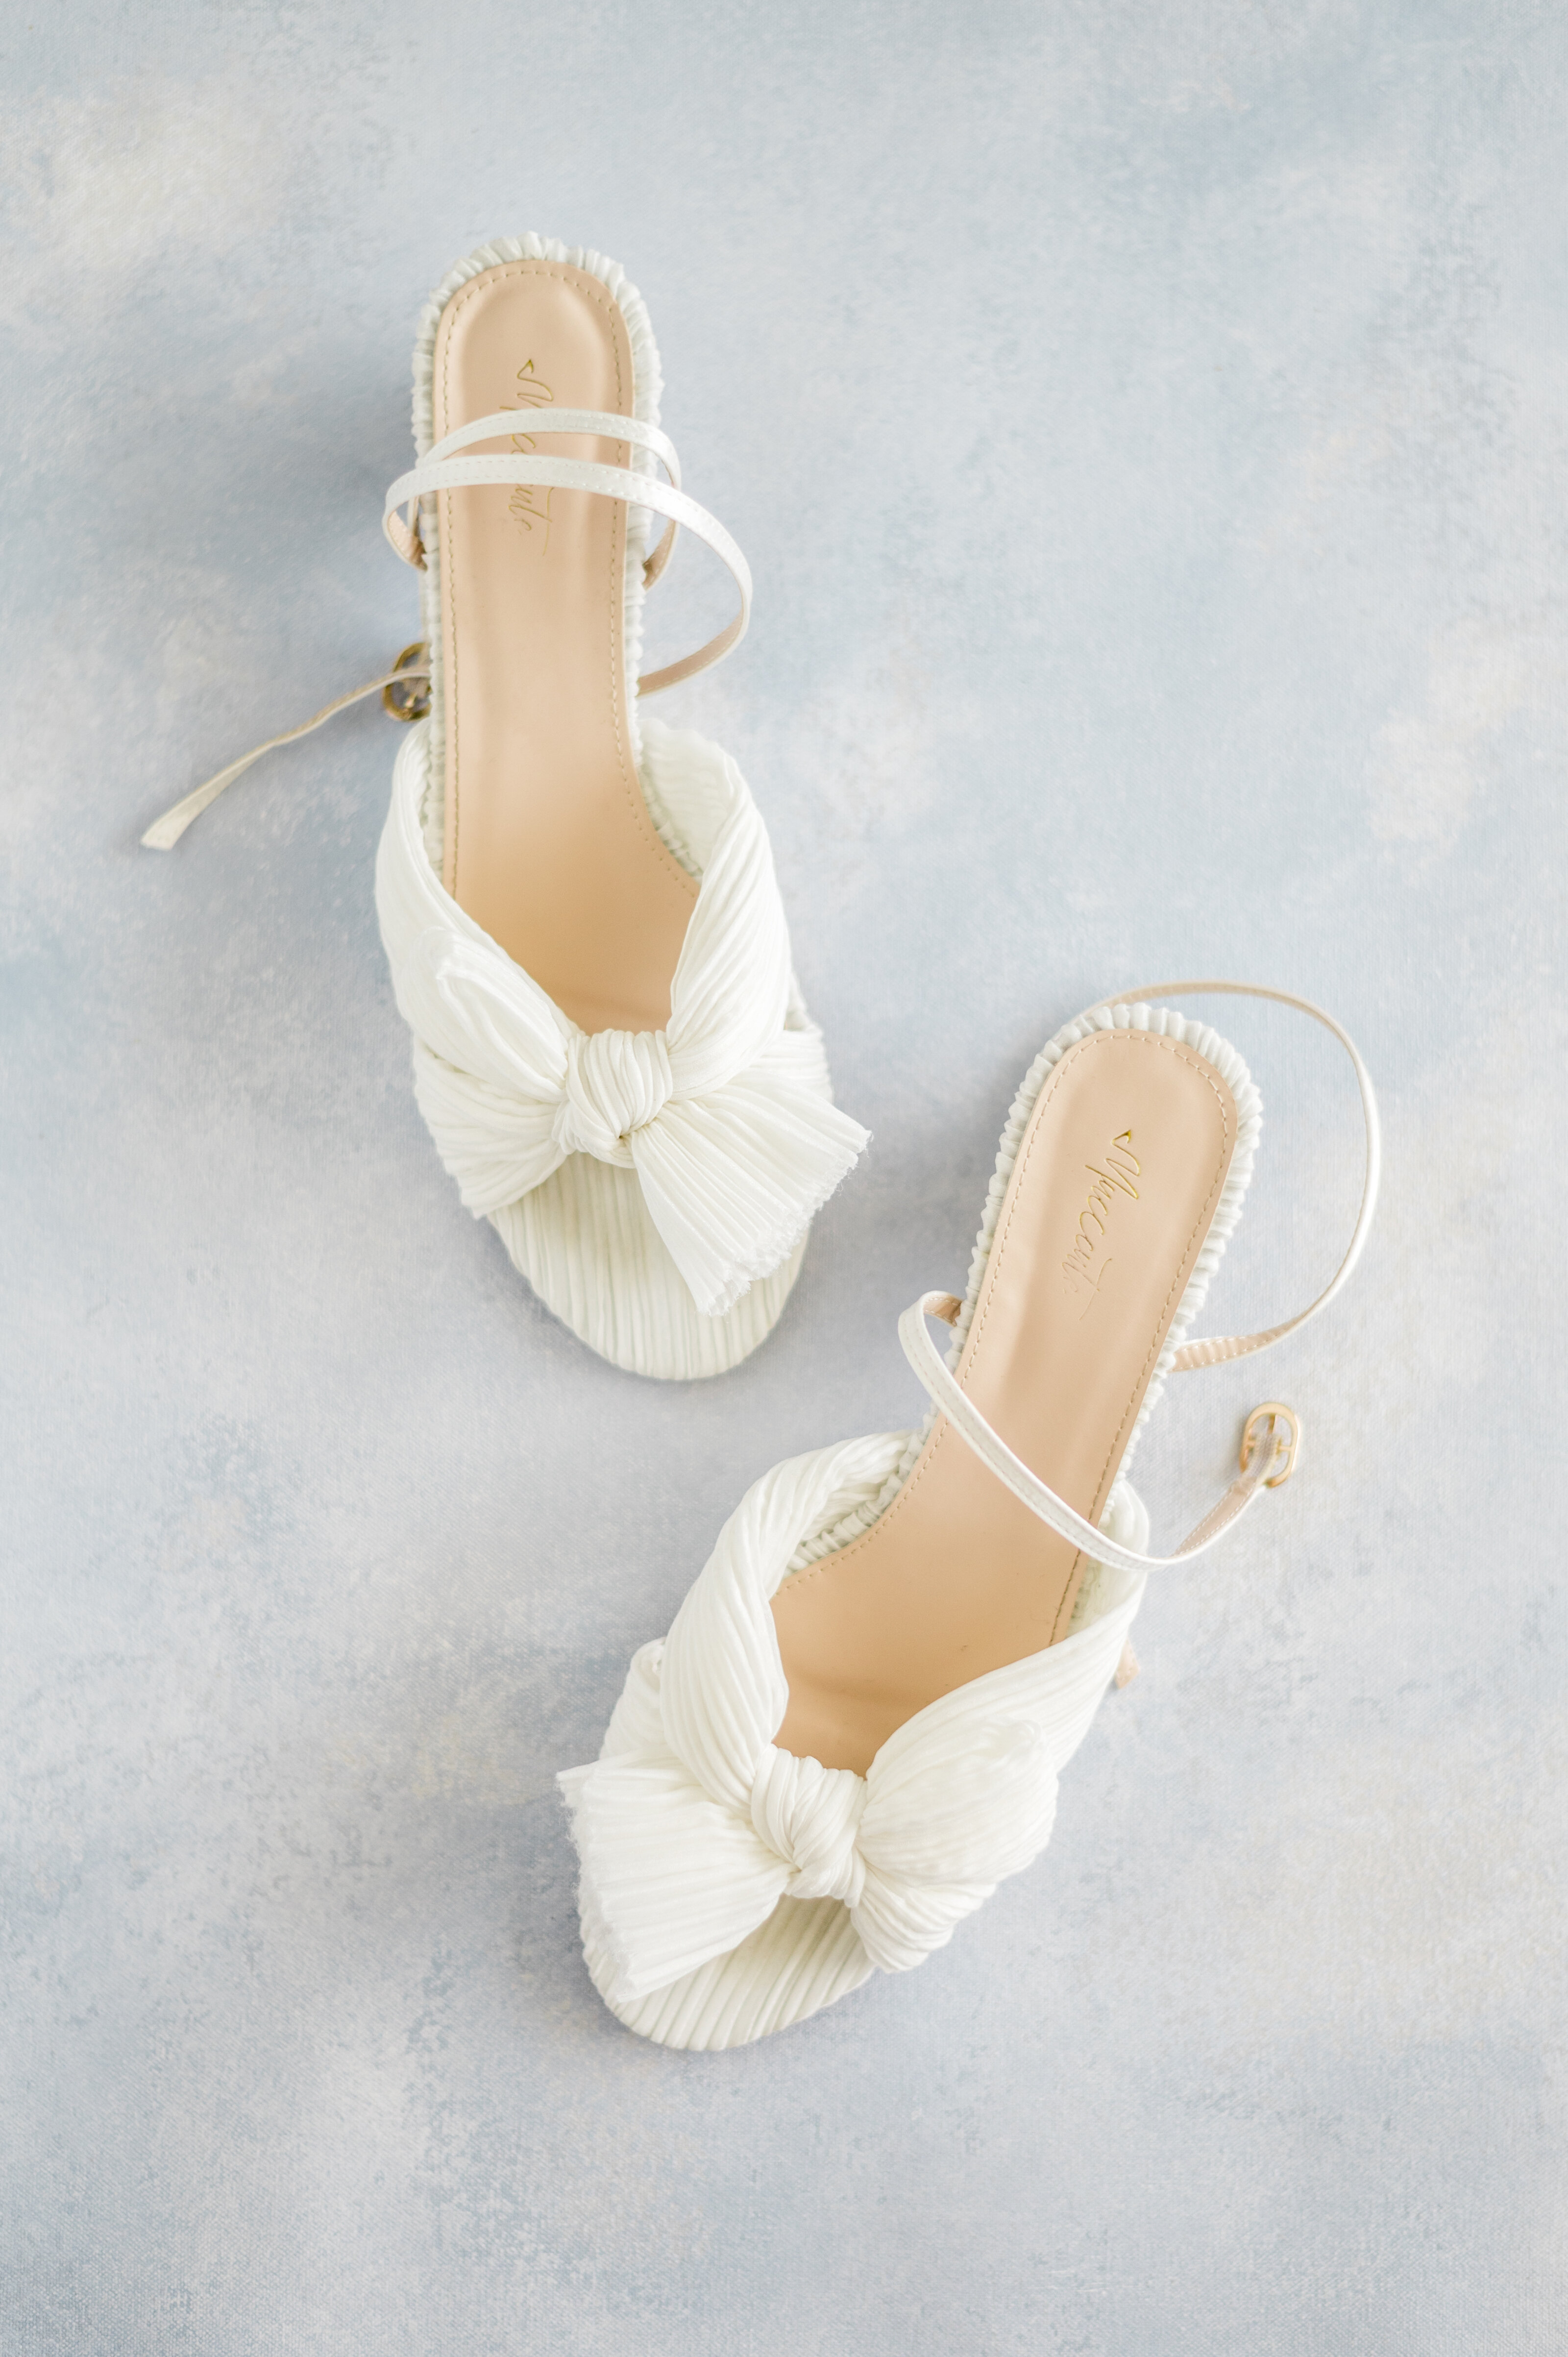 Bridal Shoe Inspiration